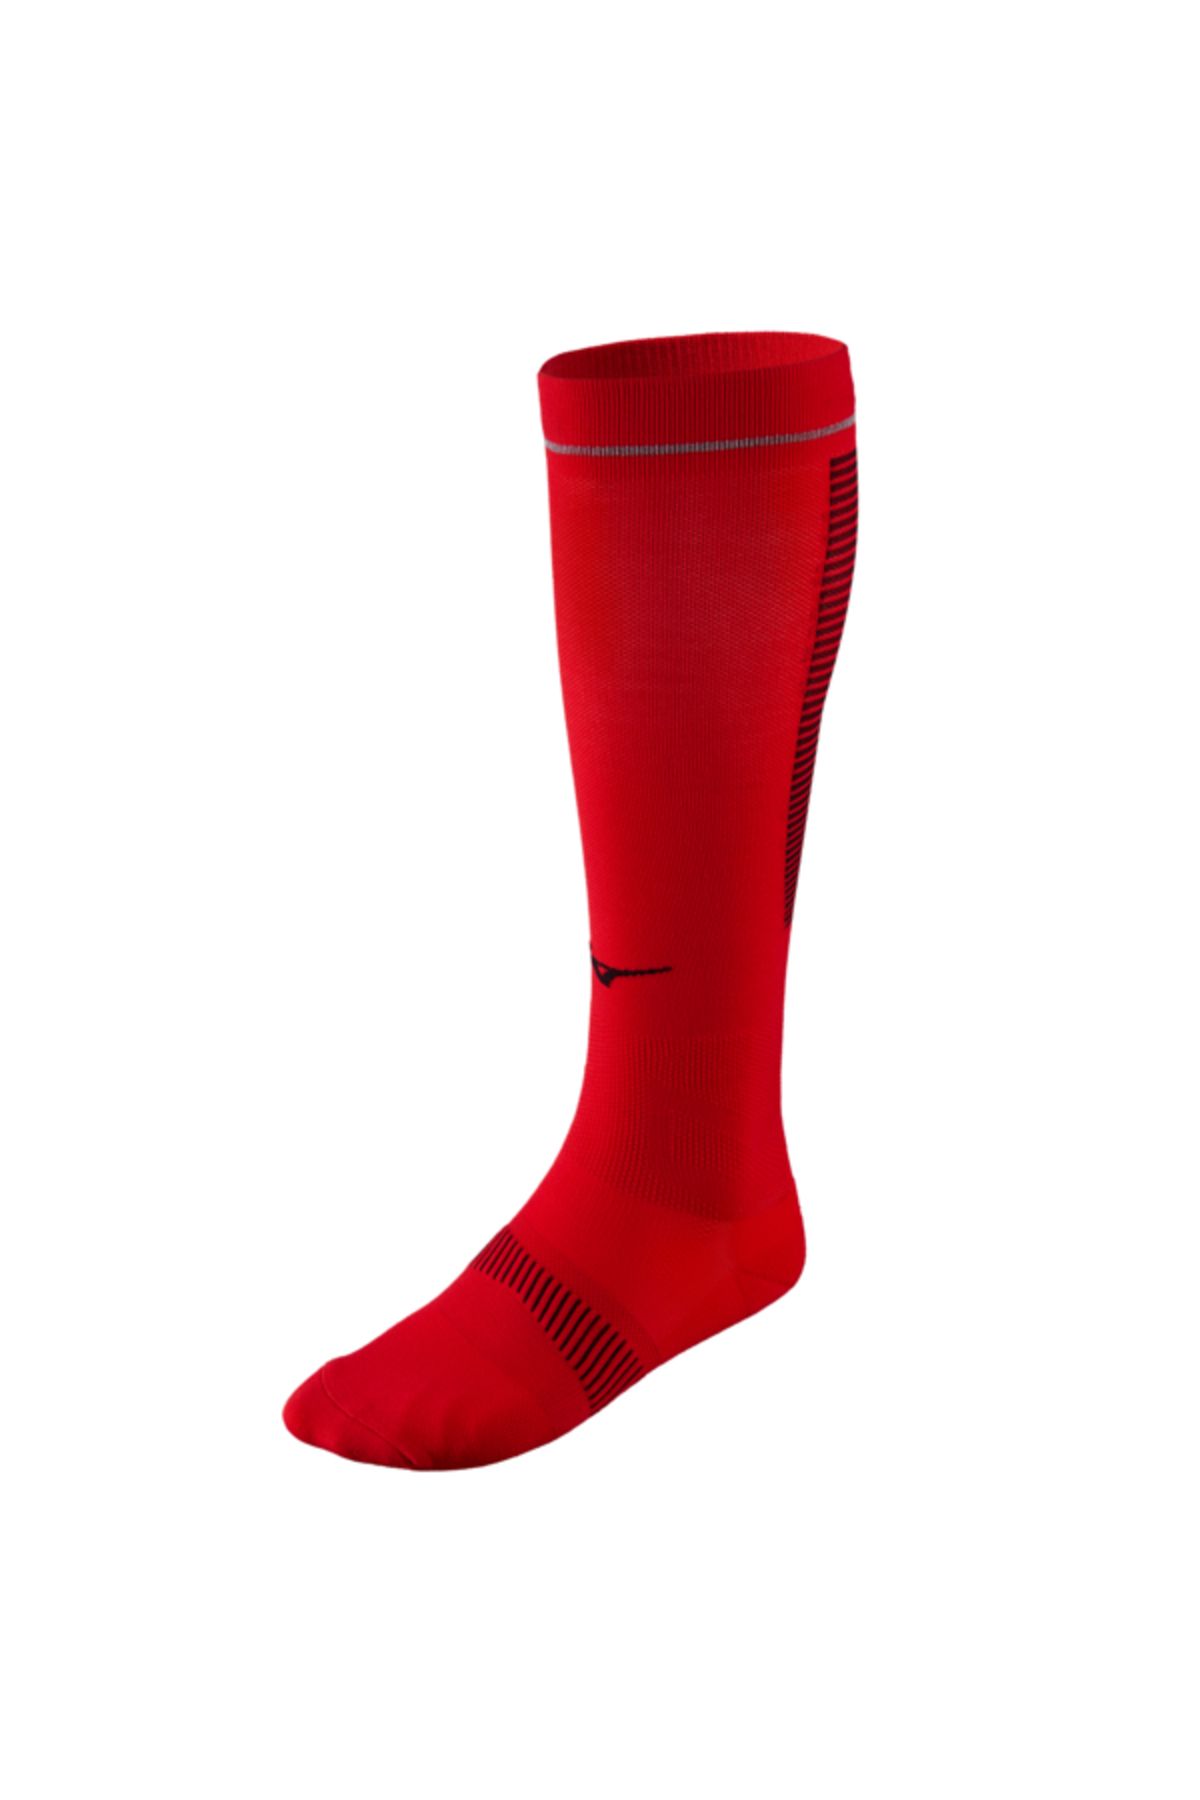 Mizuno Compression Socks Unisex Çorap Kırmızı